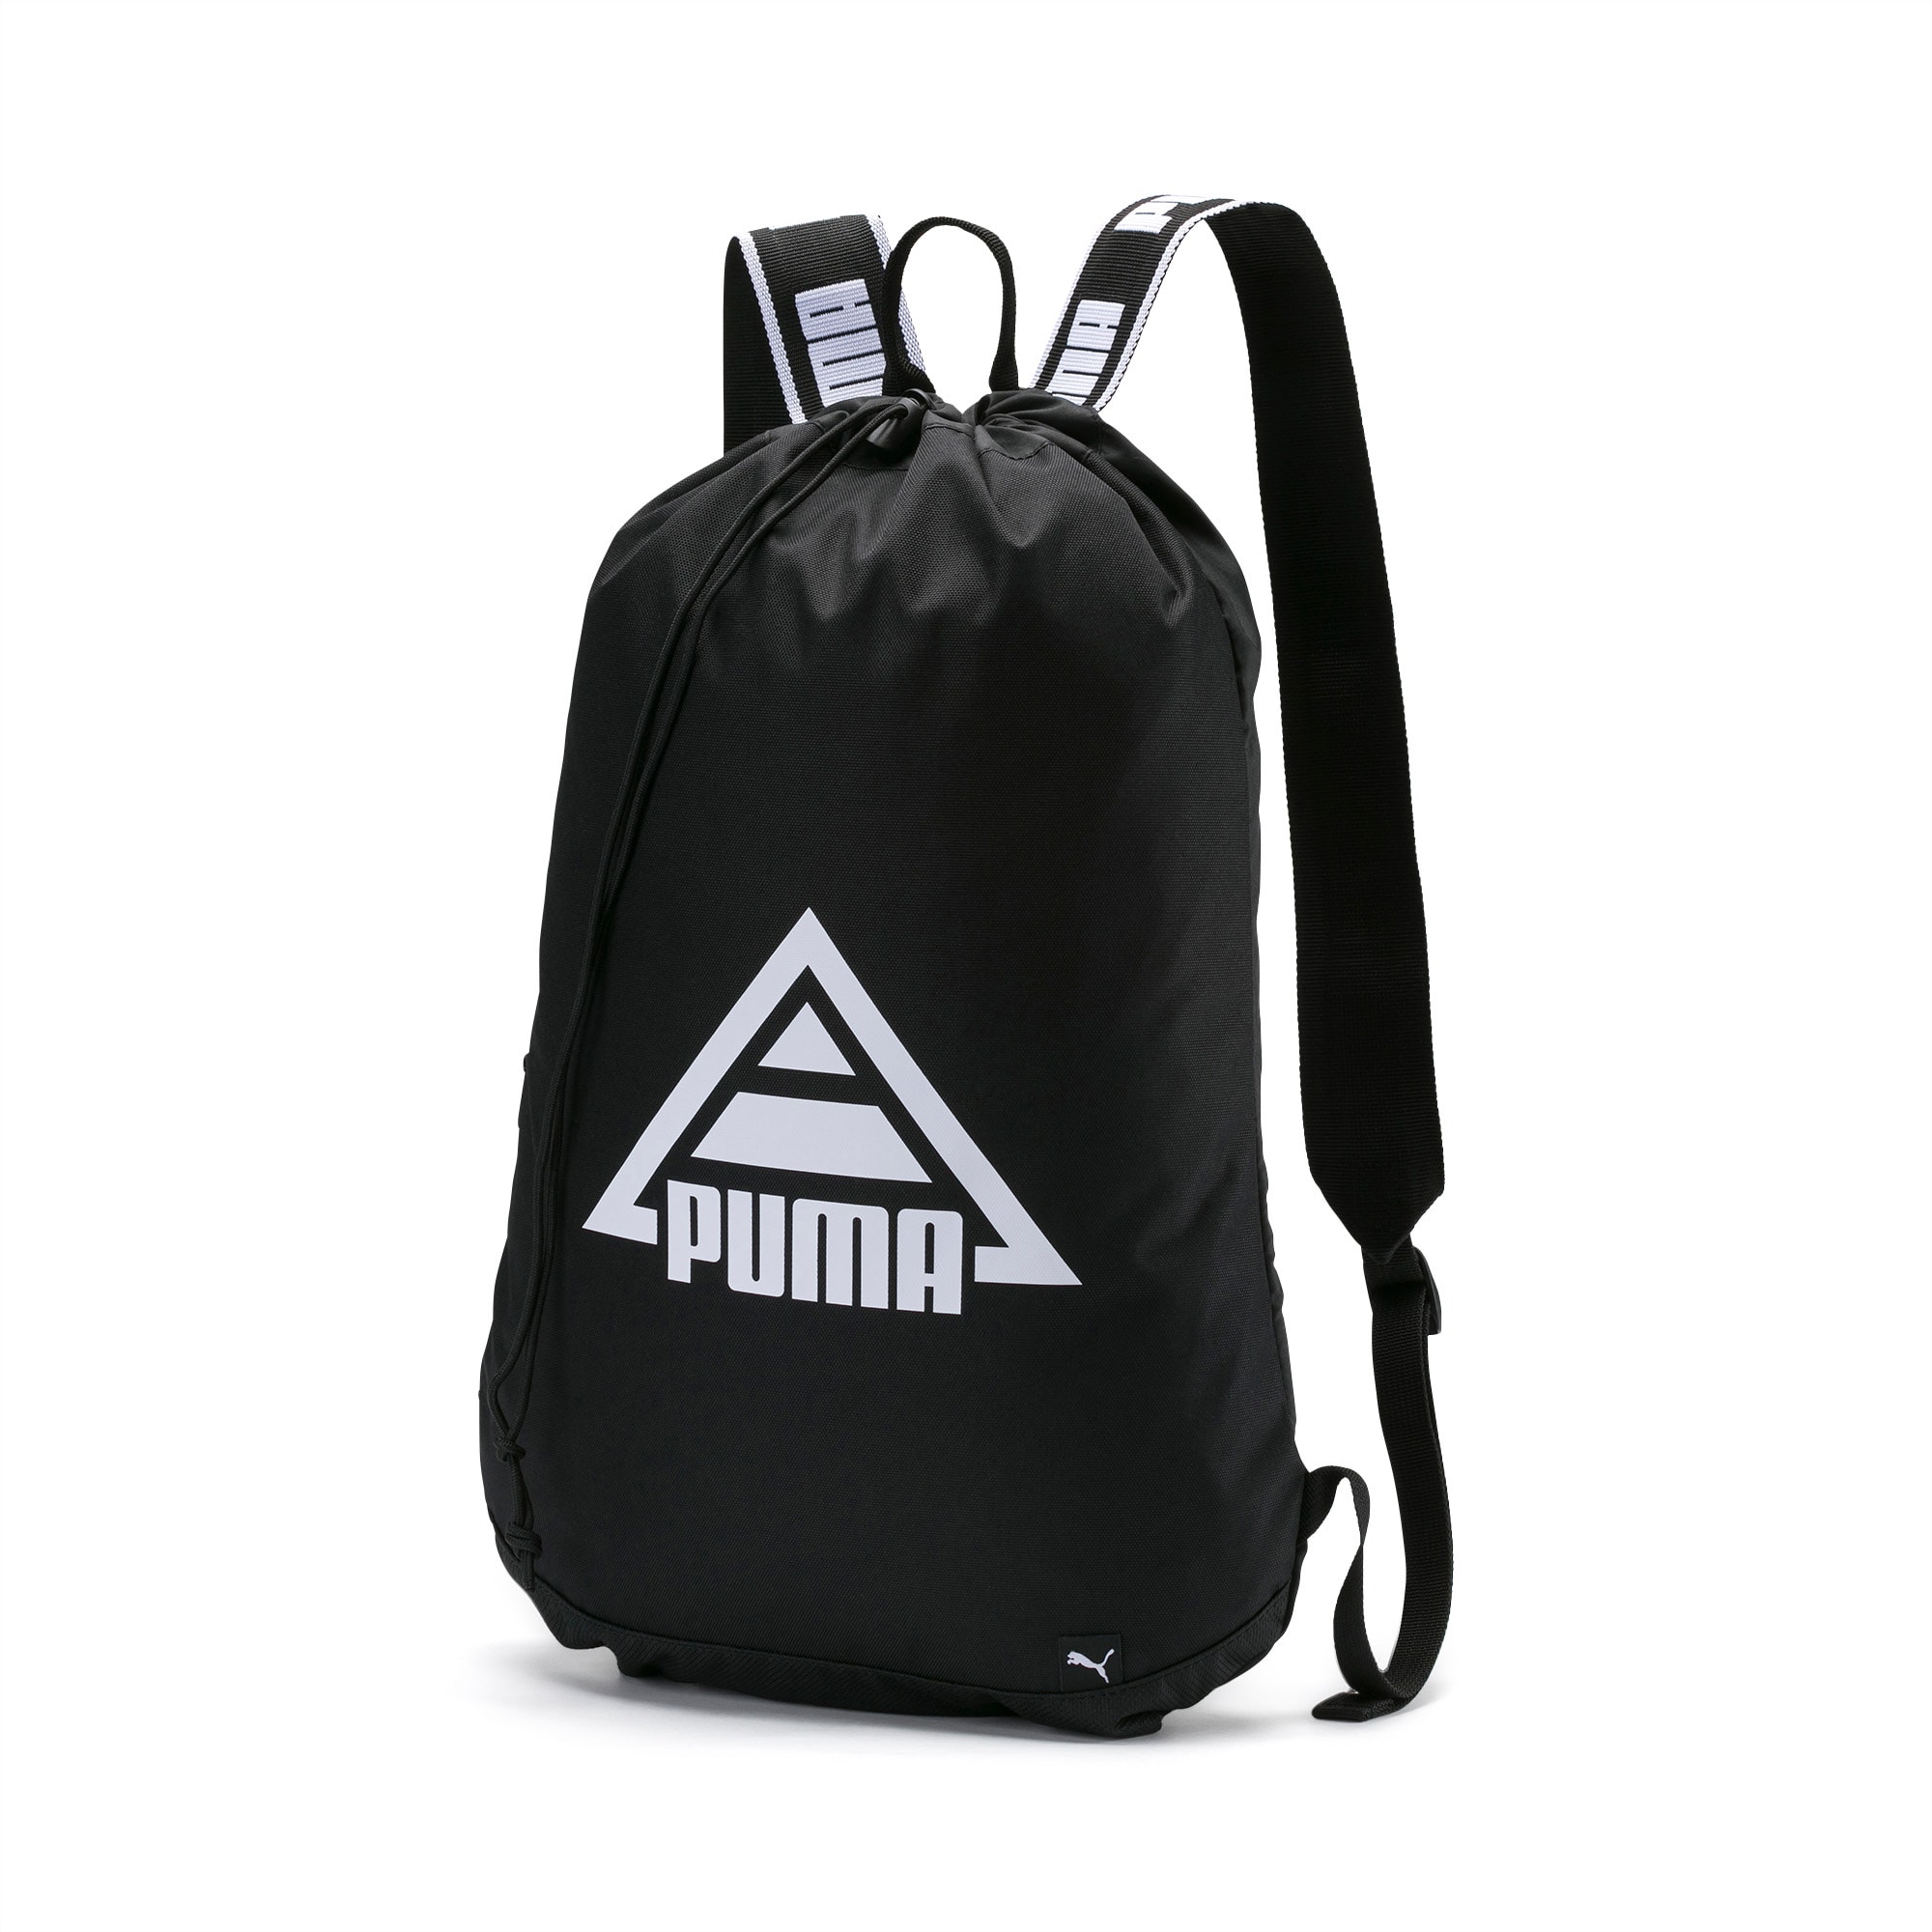 Sole Smart Bag | Puma Black | PUMA 